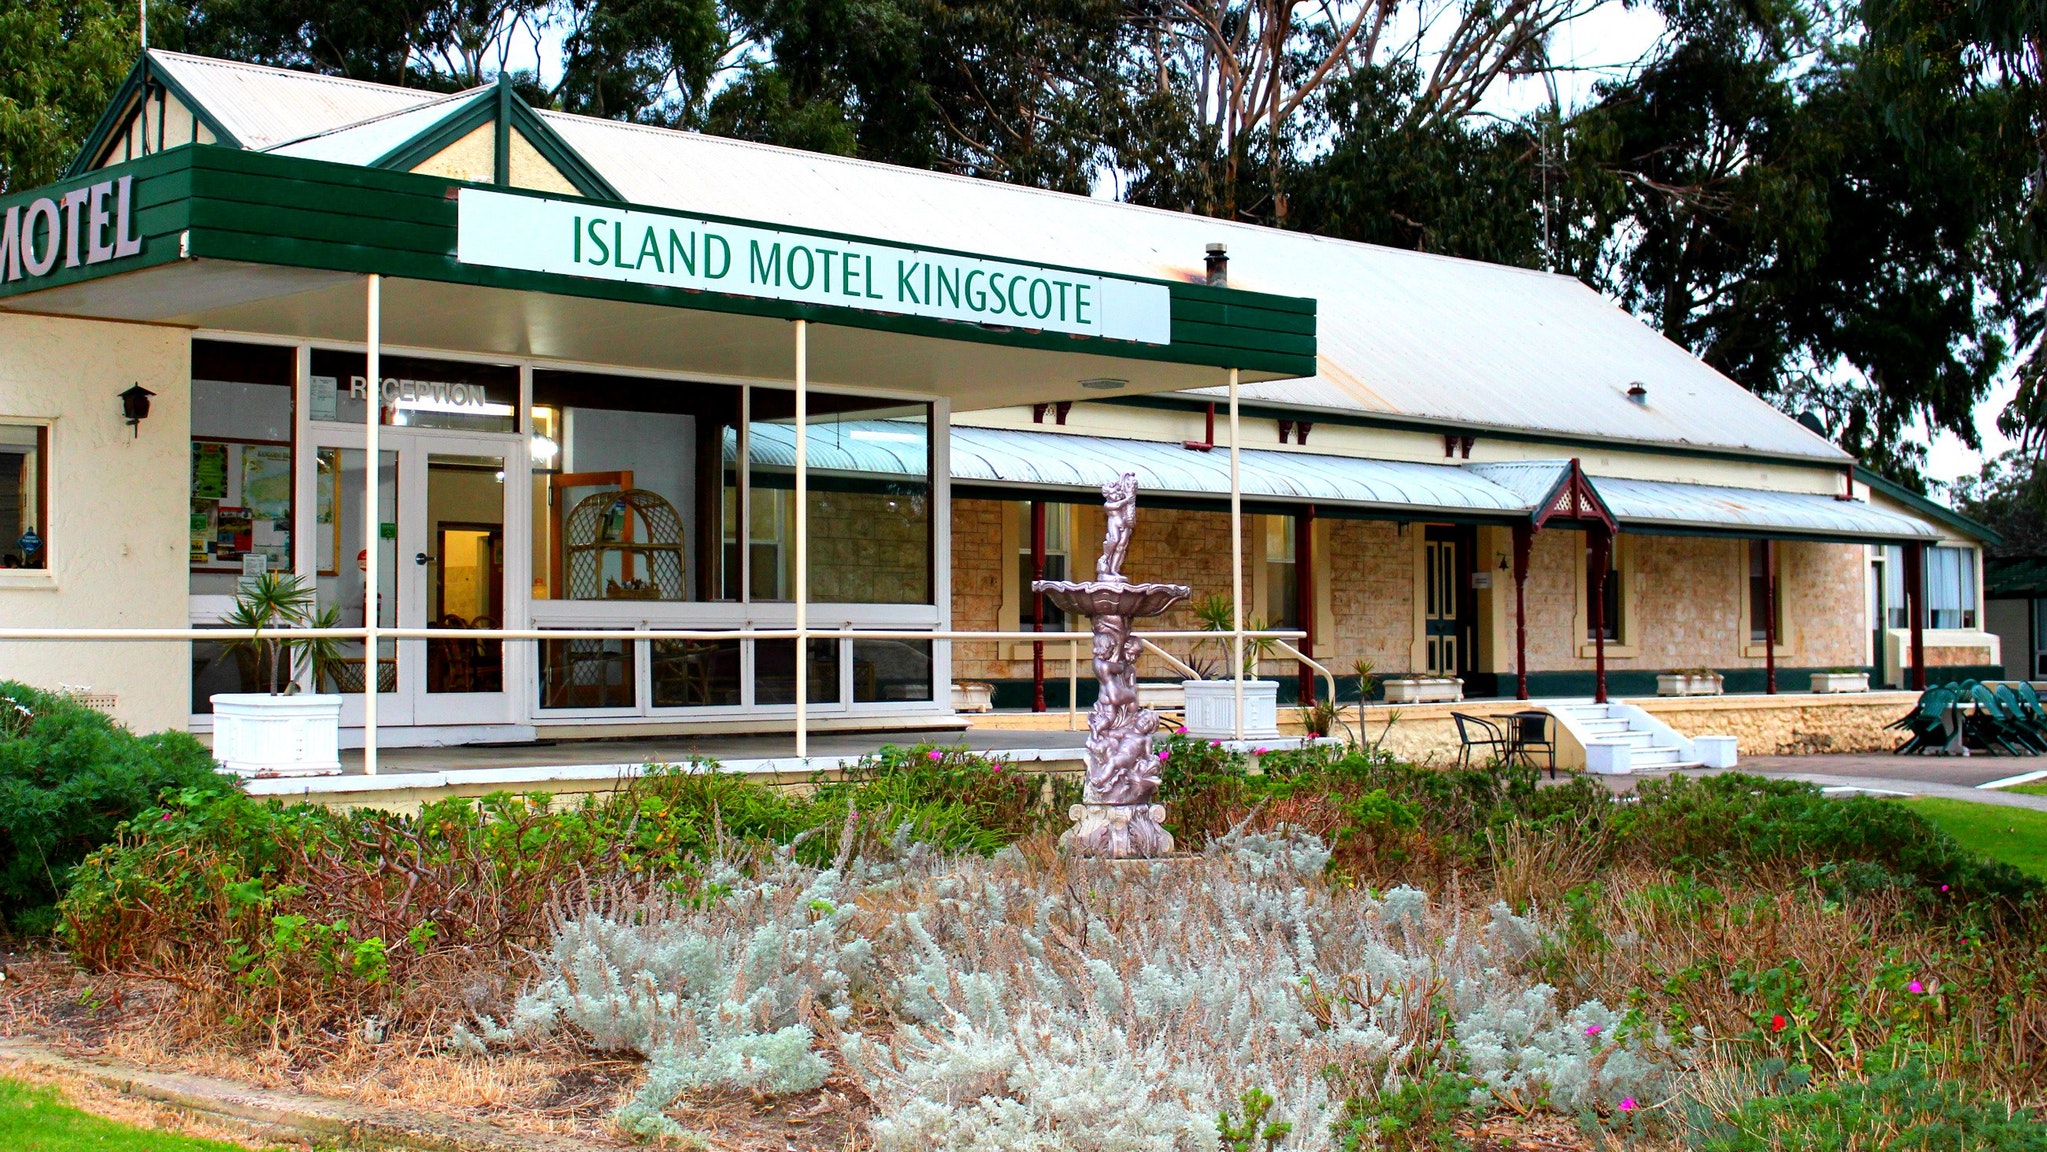 Island Motel Kingscote - Accommodation in Surfers Paradise 5